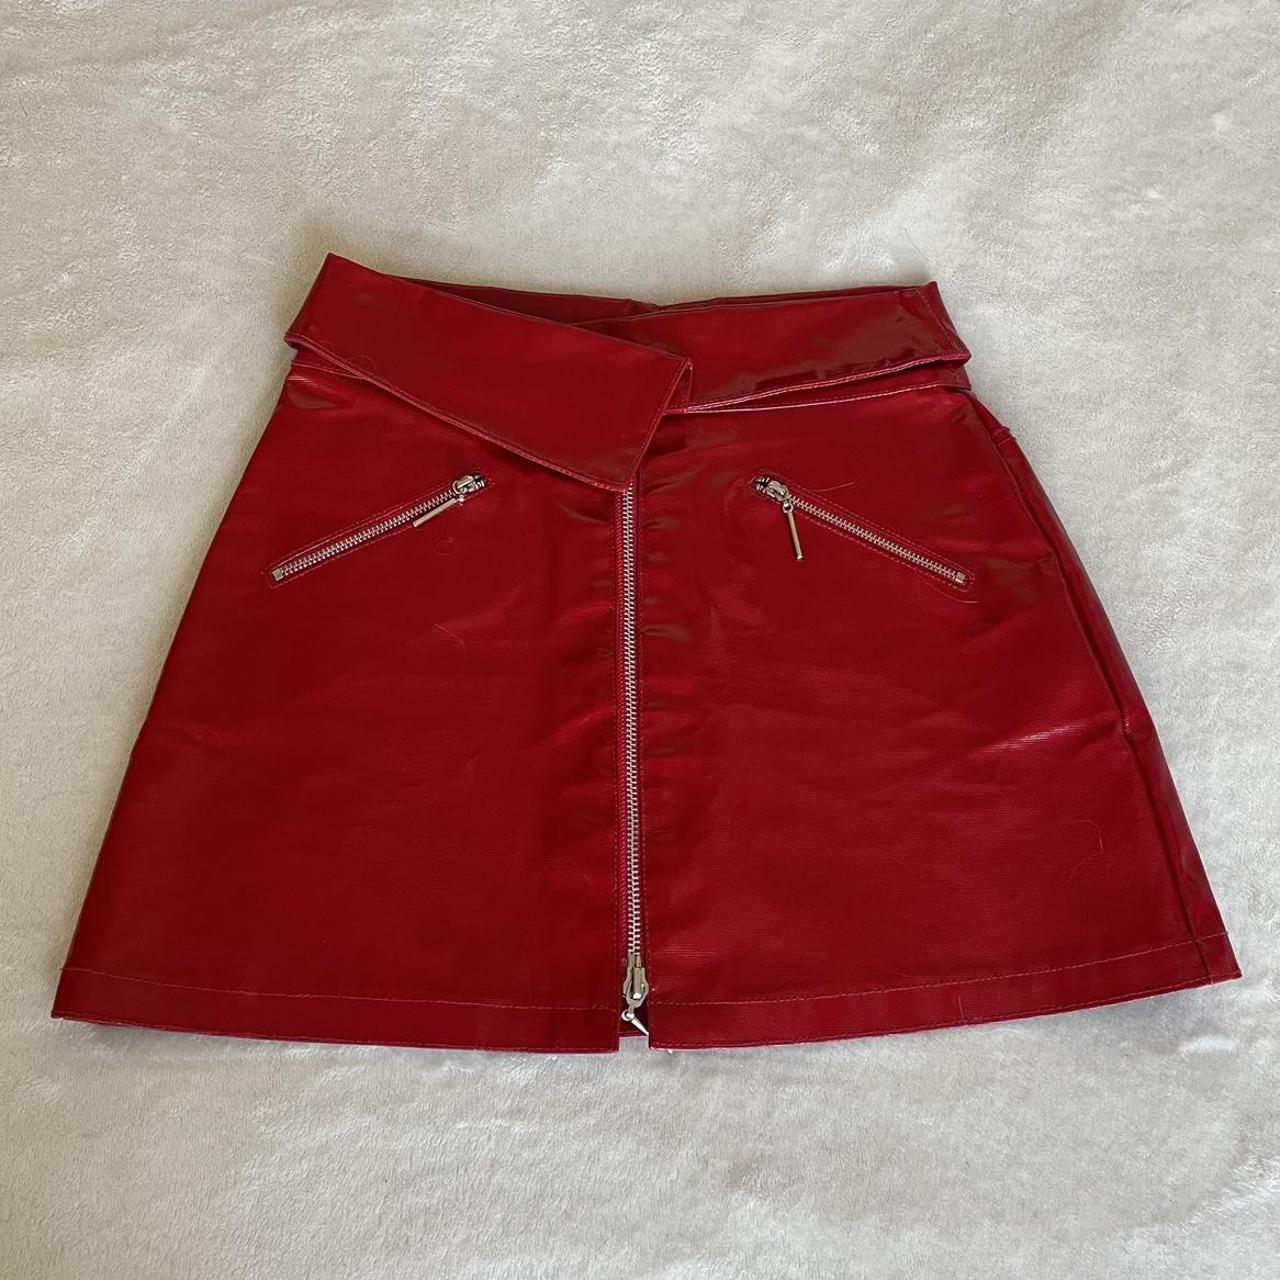 Adam Selman Women's Red and Silver Skirt